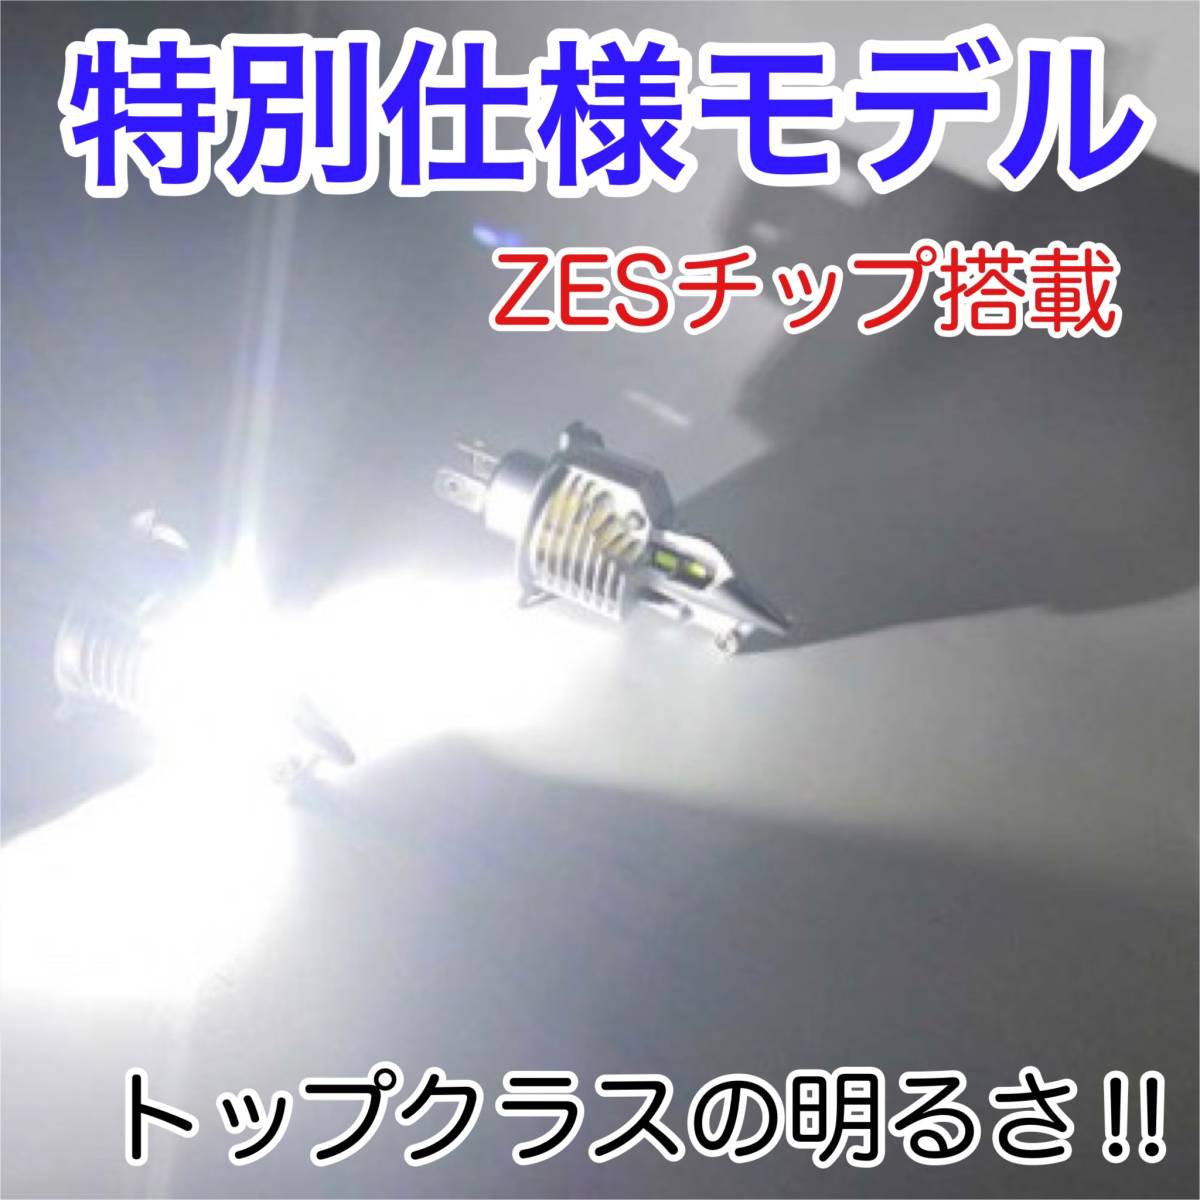 KAWASAKI カワサキ スーパーシェルパ-2000- KL250G LEDヘッドライト H4 Hi/Lo バルブ バイク用 1灯 S25 テールランプ2個 ホワイト 交換用_画像2